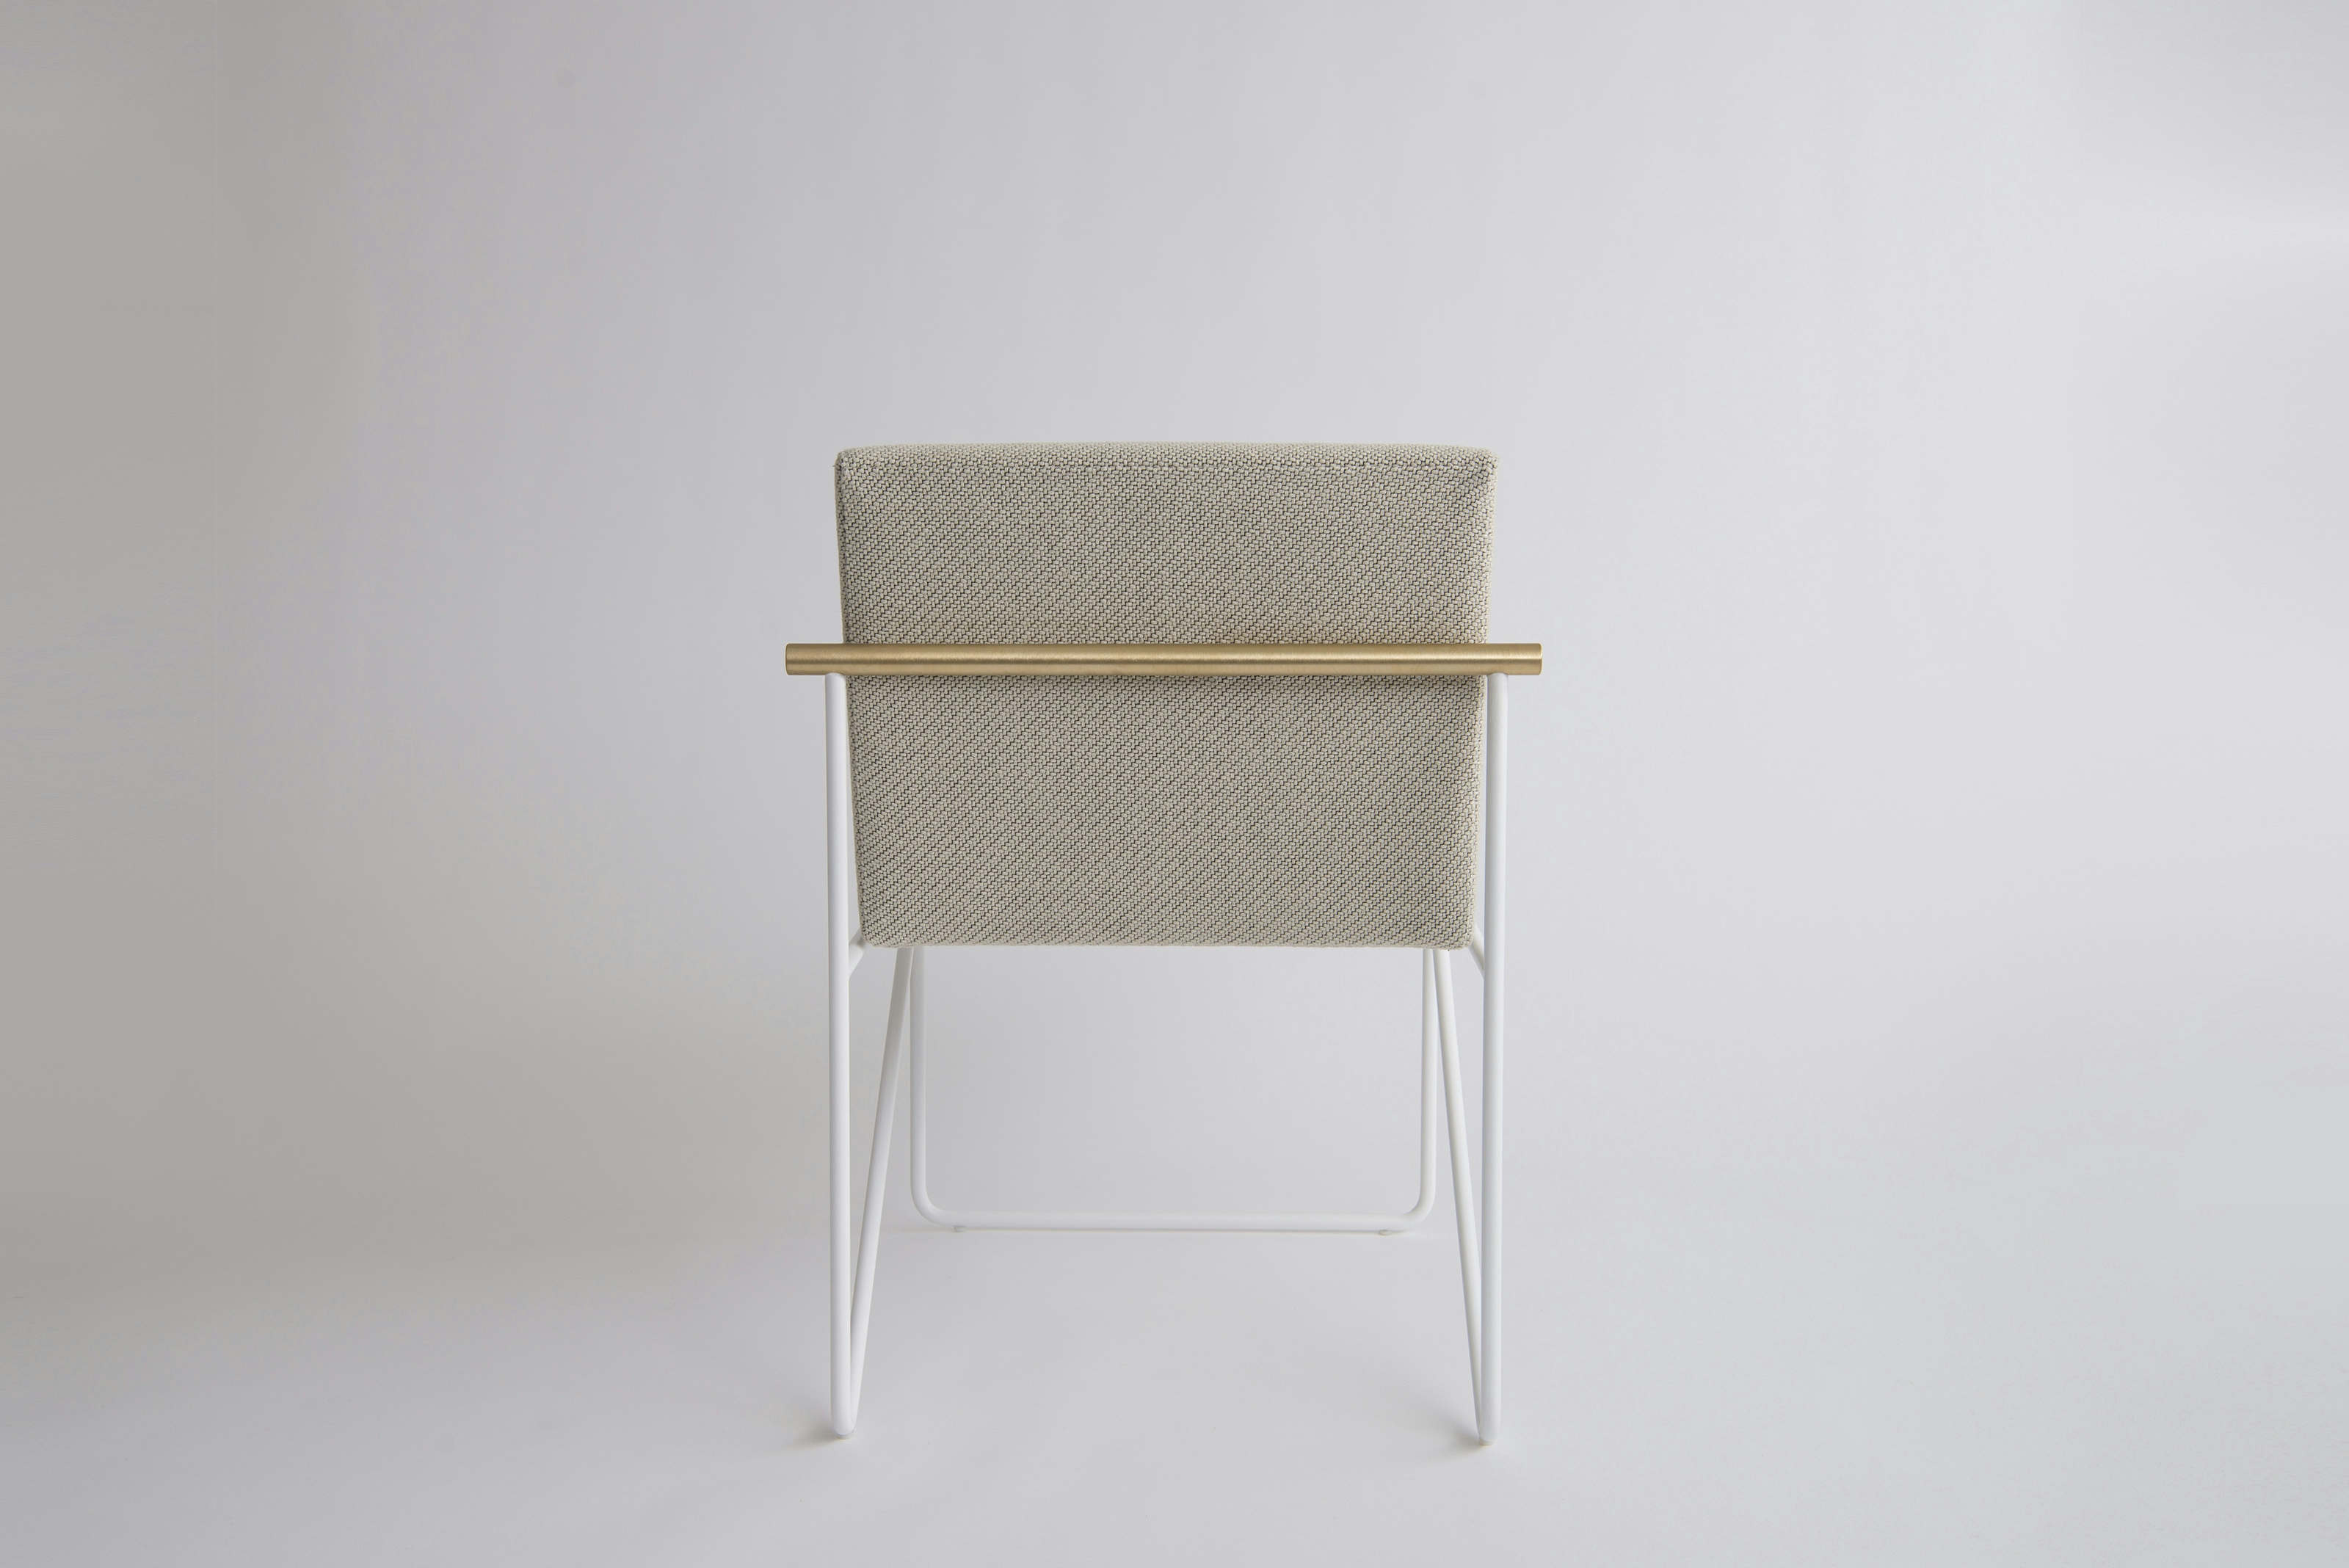 Phase Design Reza Feiz Kickstand Side Chair 5 Web